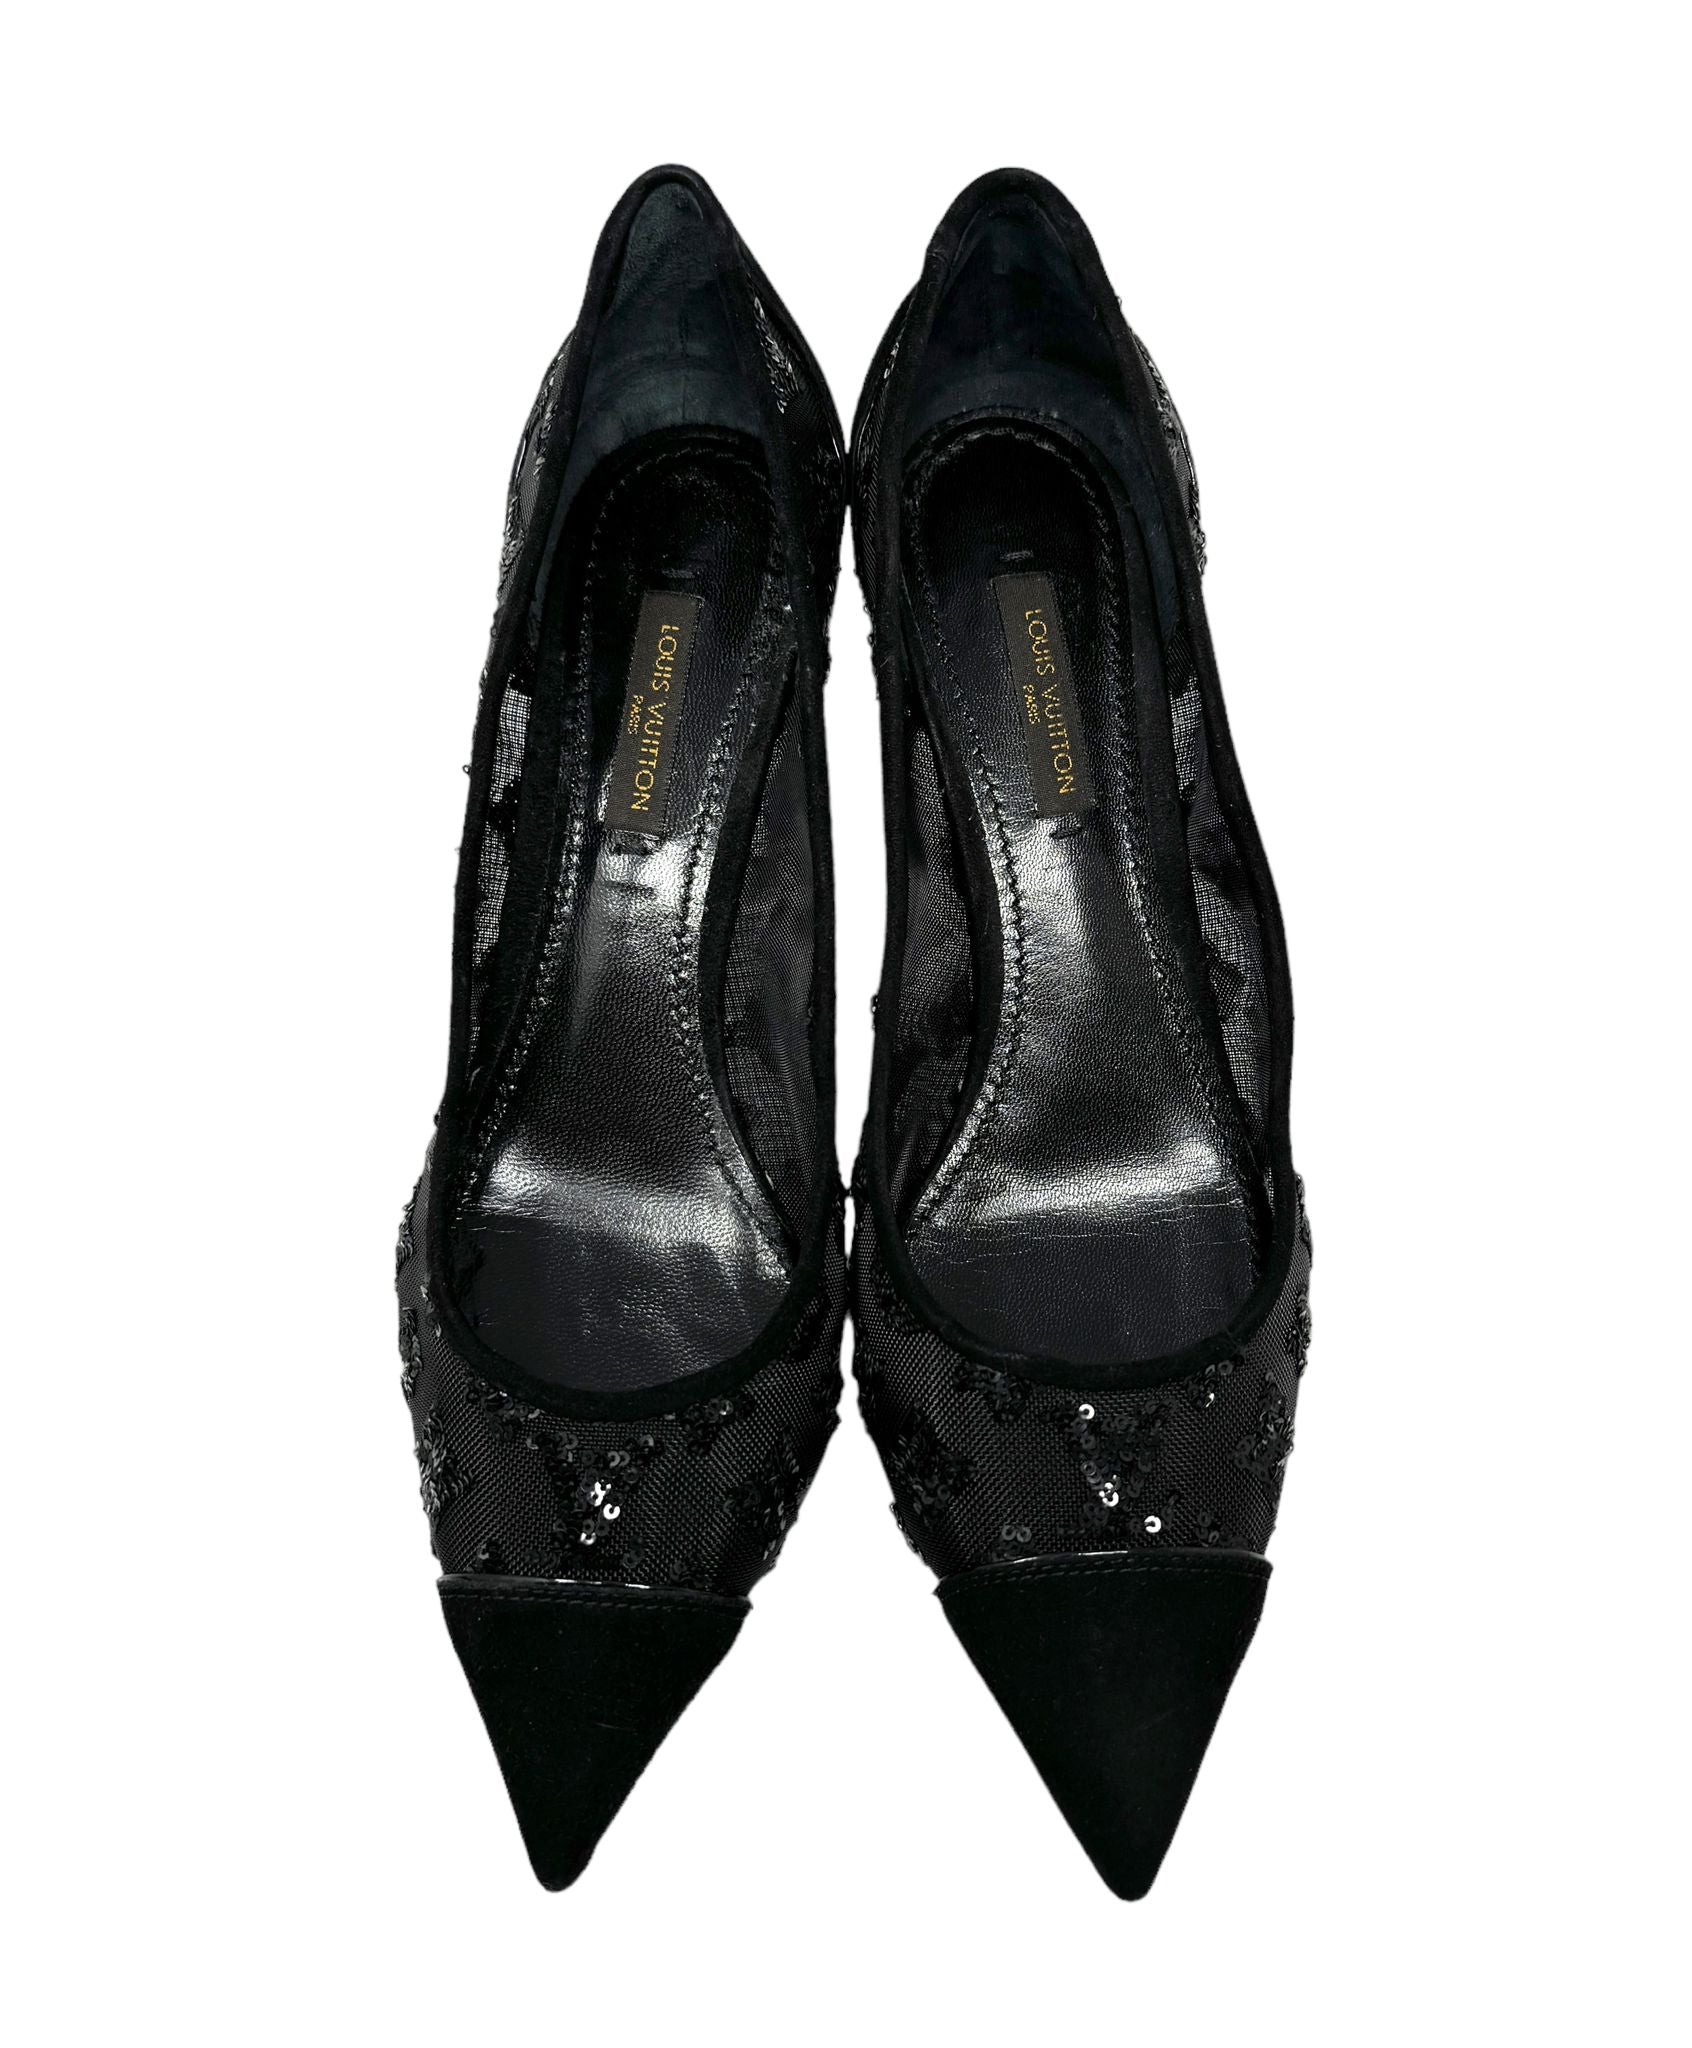 louis vuitton heels black